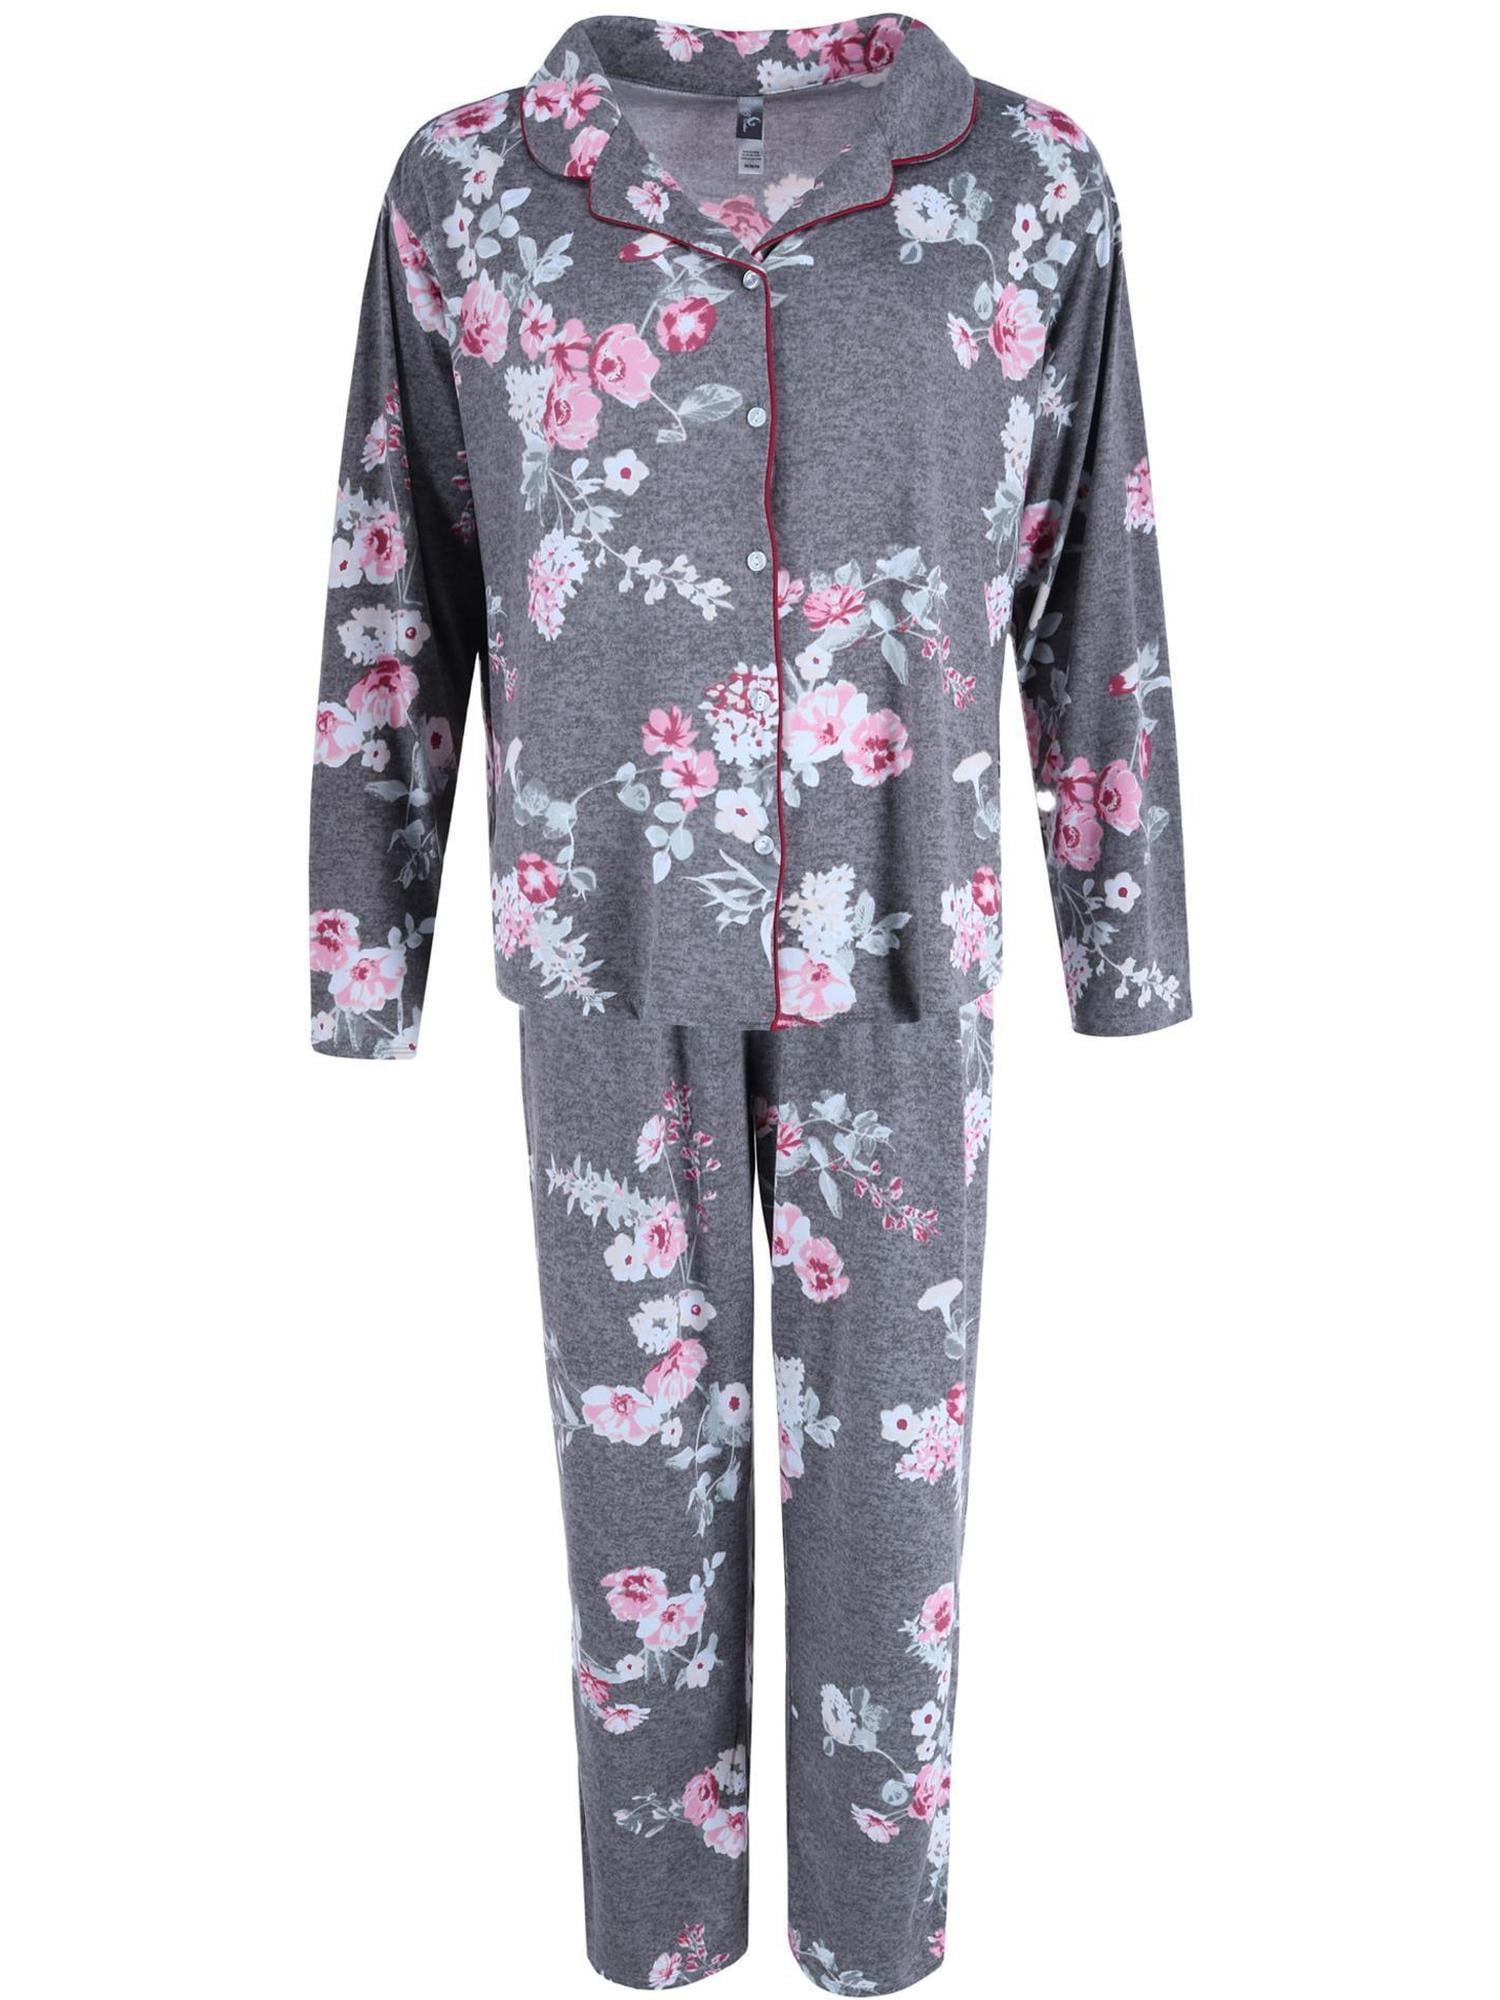 Pianpianzi Womens Sleepwear Chemise Long Pajamas Set for Women